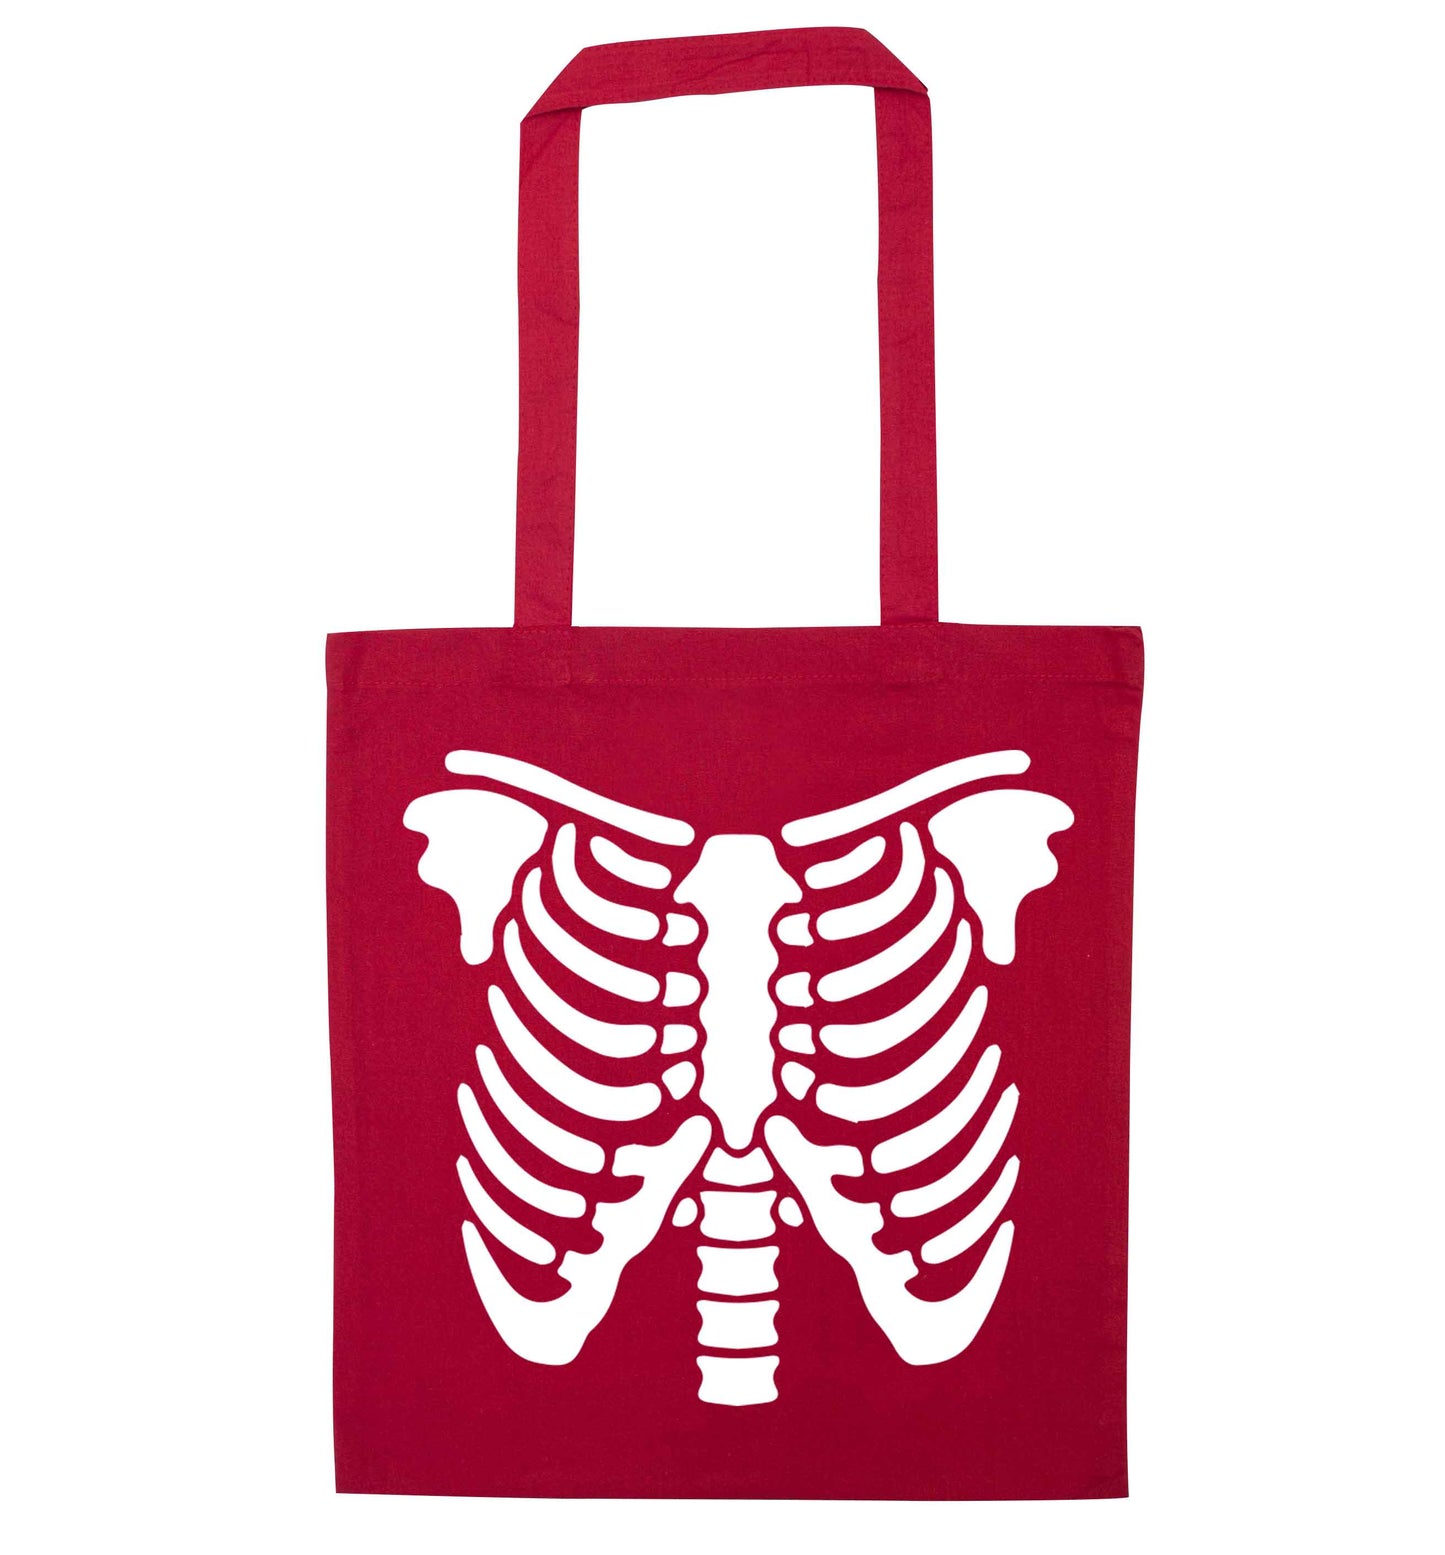 Skeleton ribcage red tote bag